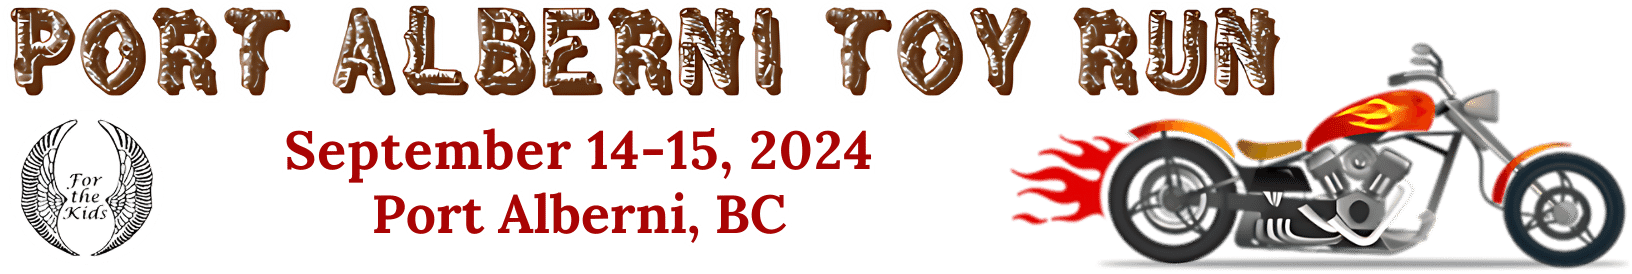 September 14-15, 2024 - 40th Annual Toy Run